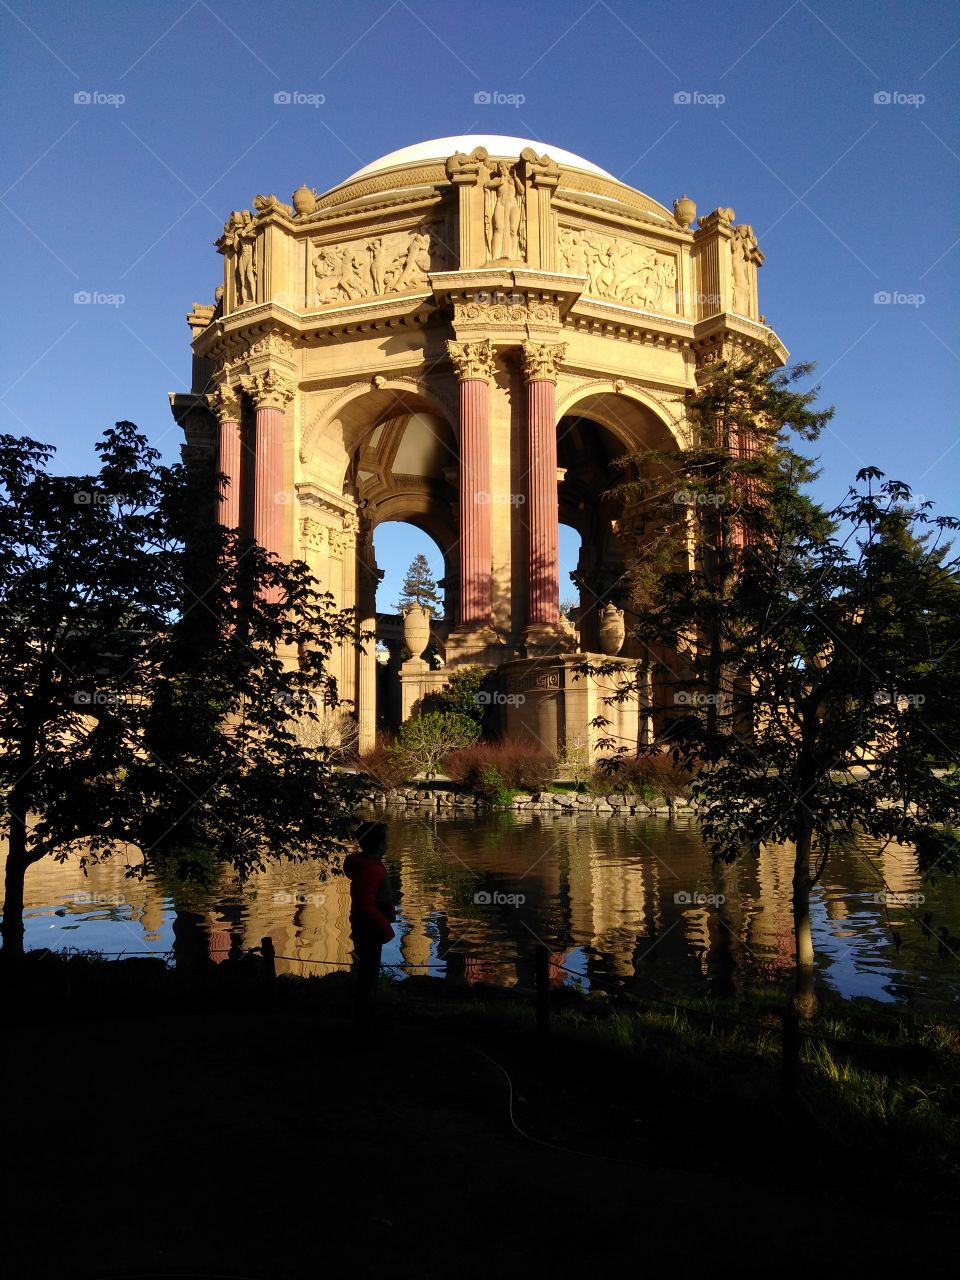 San Francisco palace of fine arts